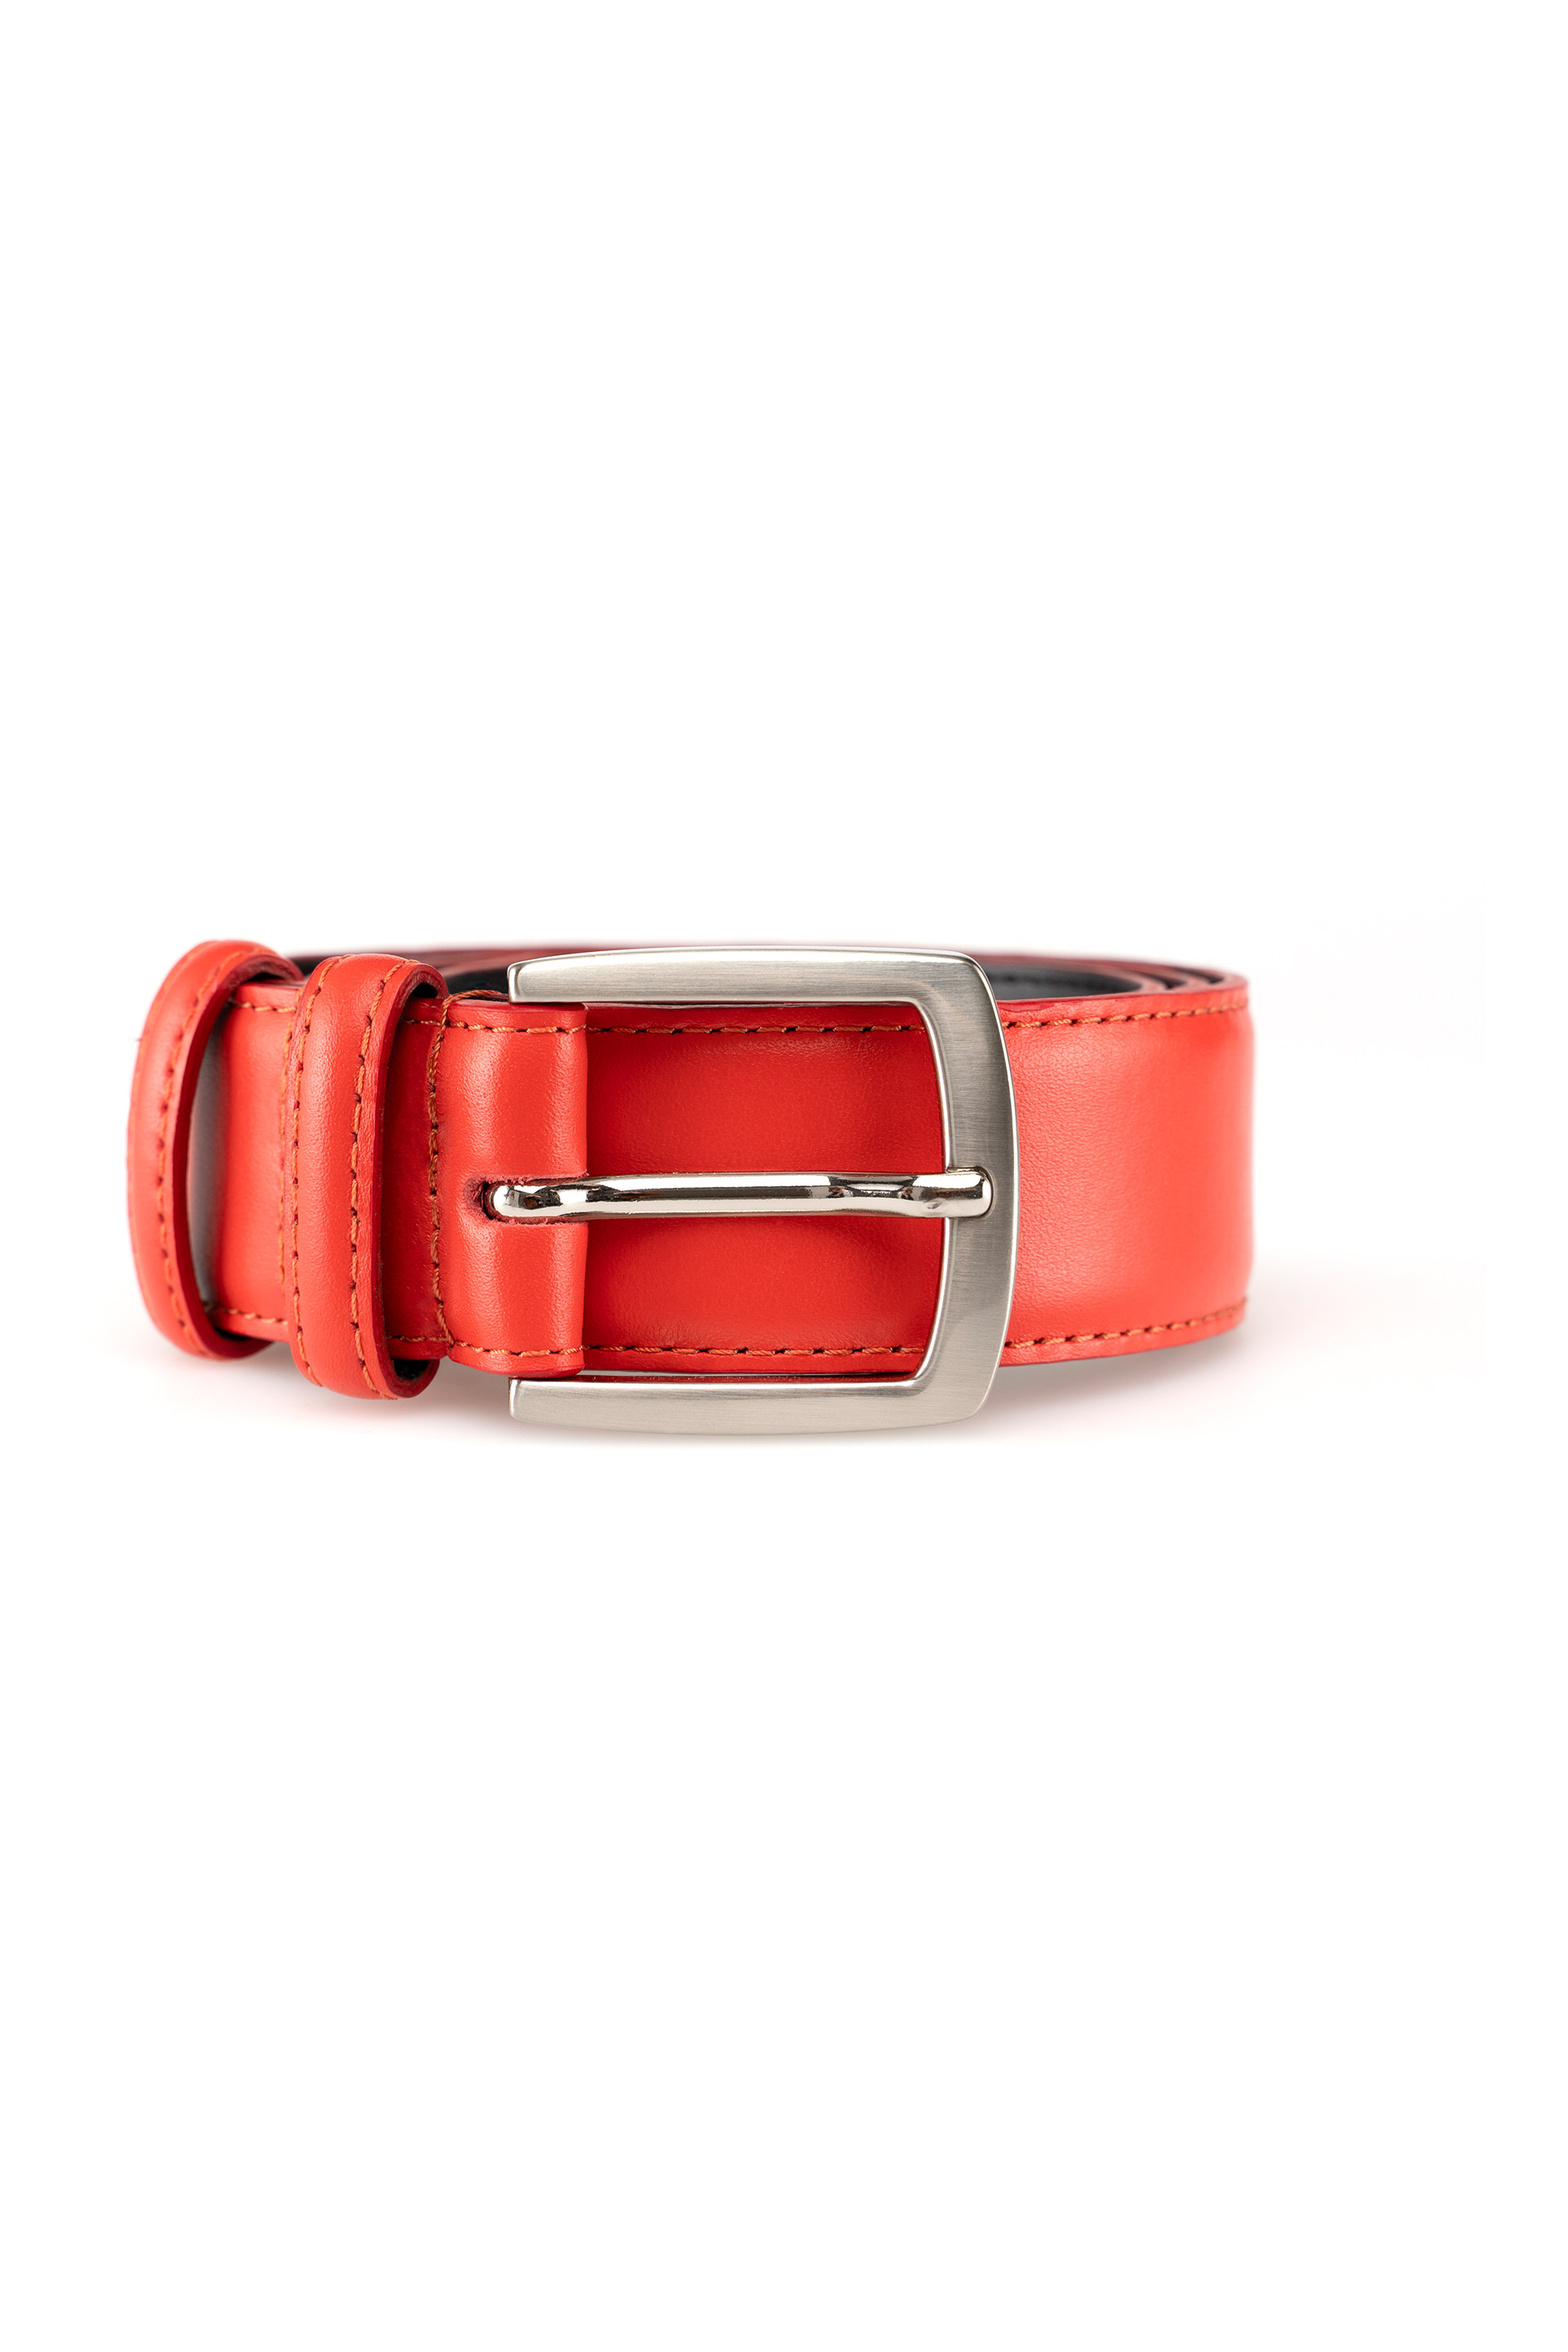 be150_classic-leather-belt_hibiscus.jpg